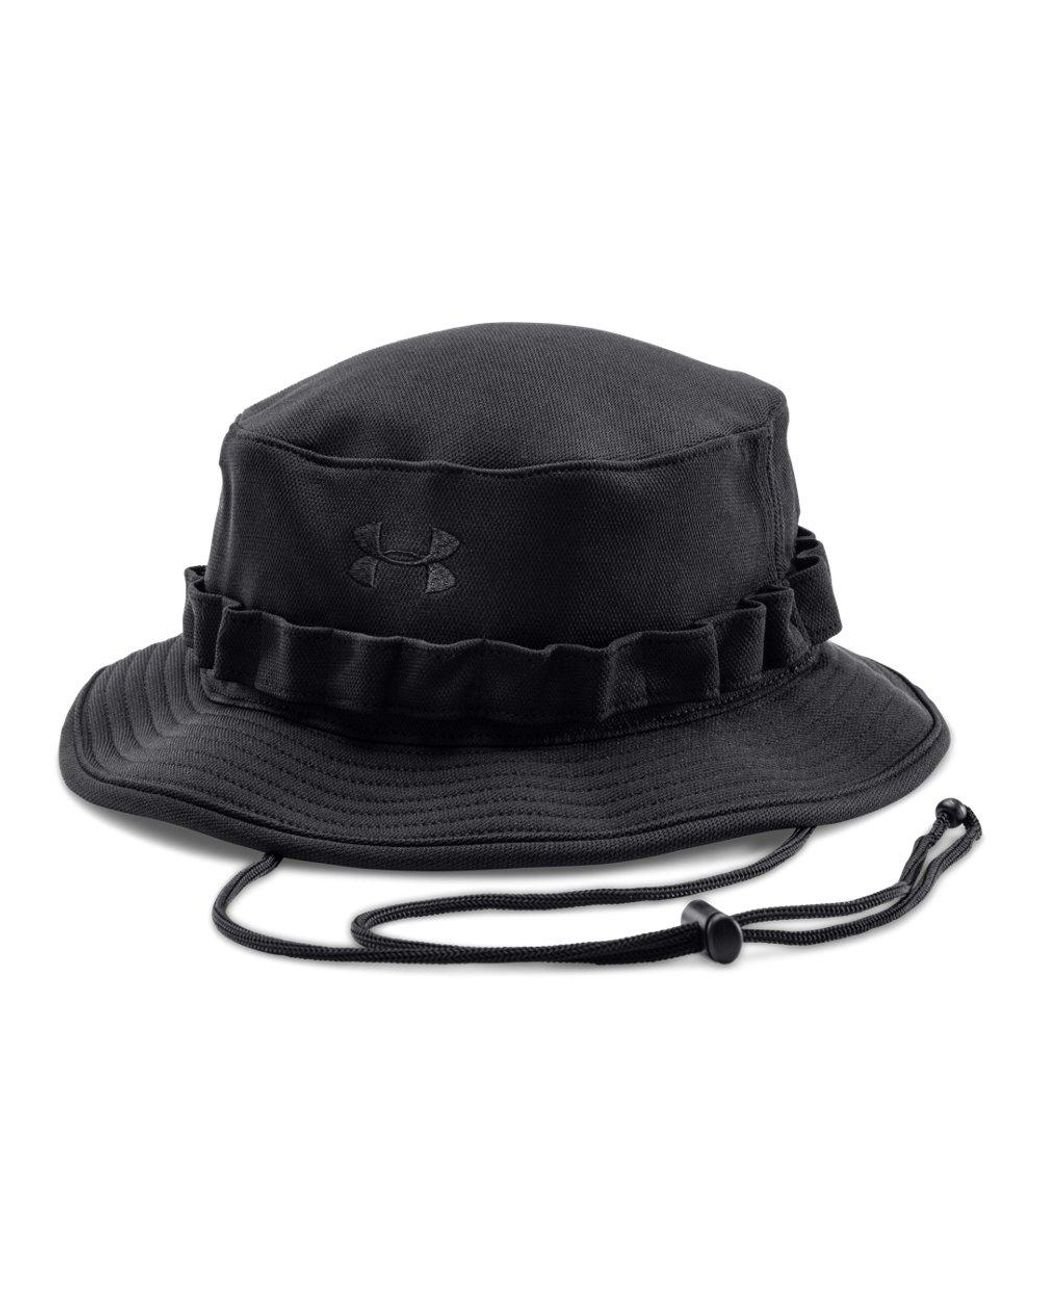 https://cdna.lystit.com/1040/1300/n/photos/underarmour/4cb05481/under-armour-Black-Tactical-Bucket-Hat.jpeg